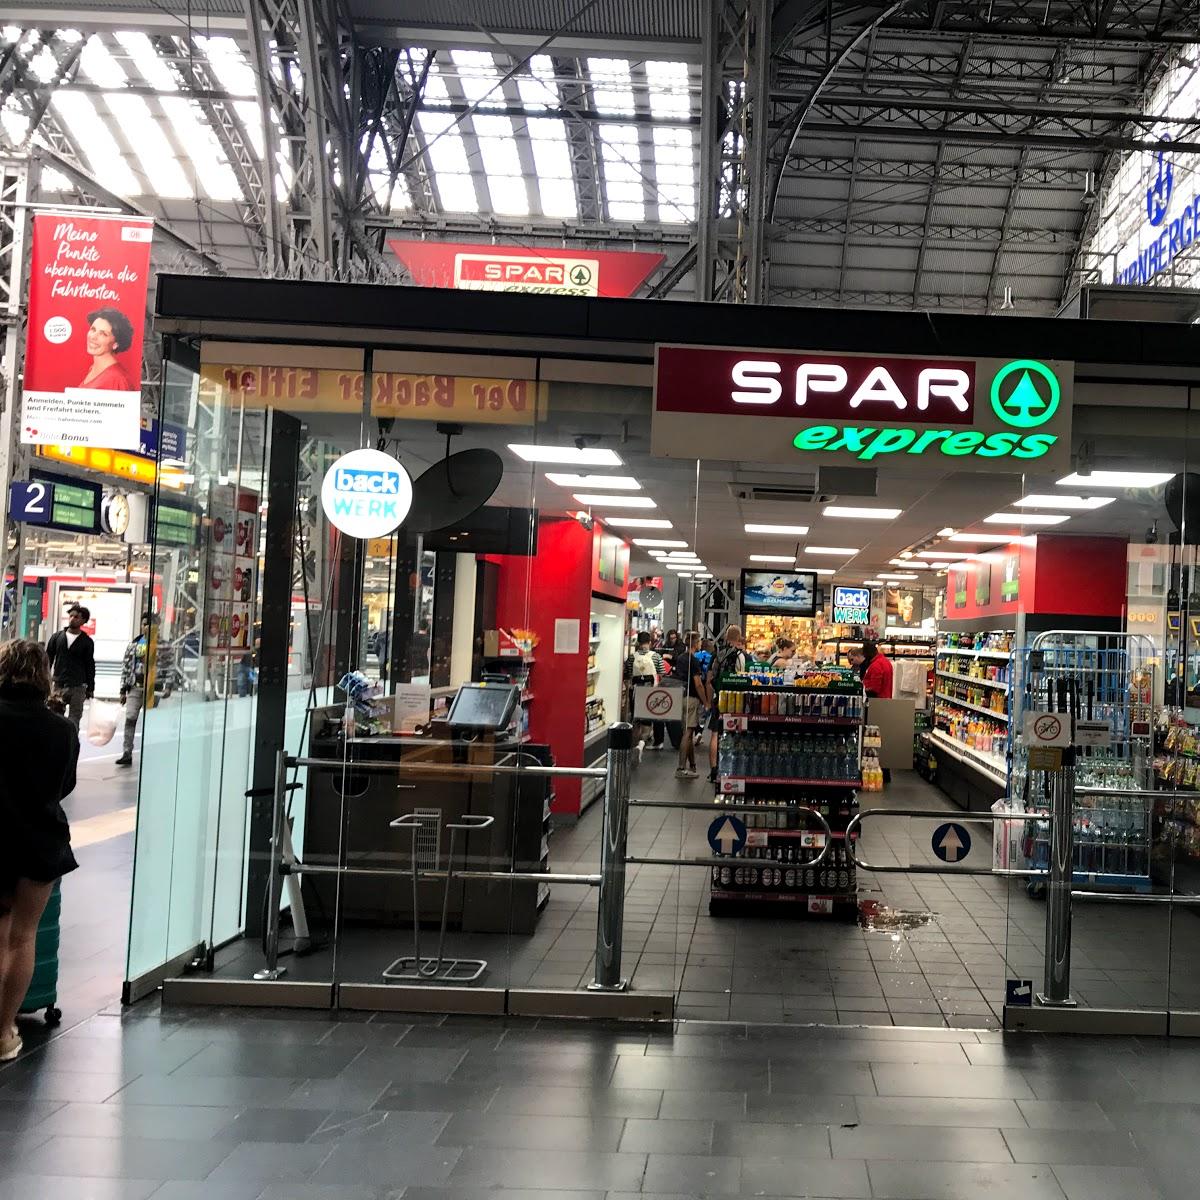 Restaurant "SPAR Express - Lieferservice" in Frankfurt am Main